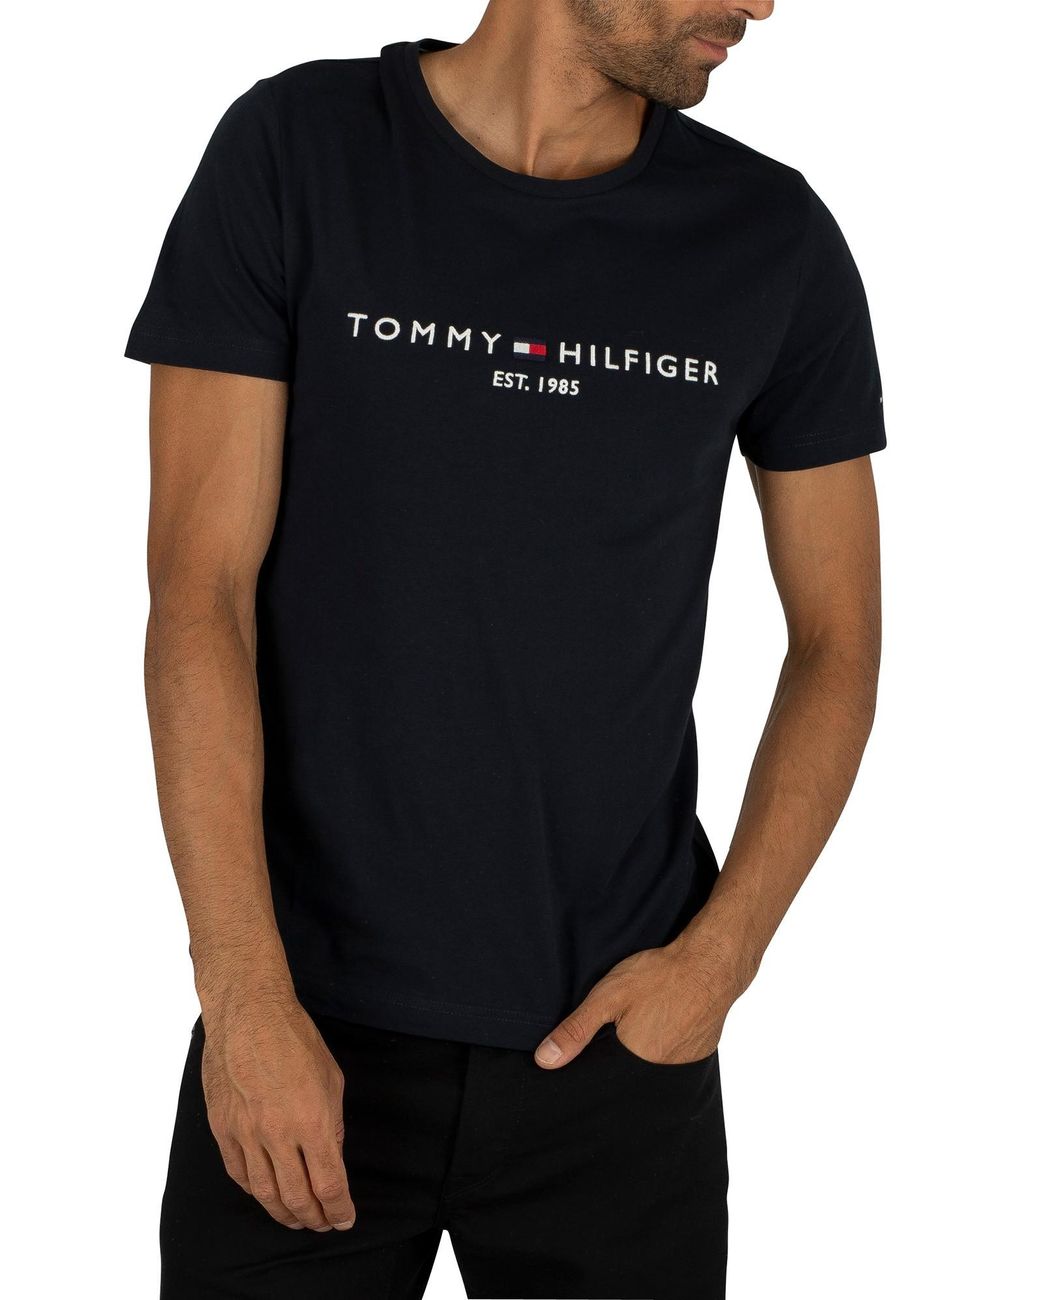 Buy > cheap tommy hilfiger t shirts > Very cheap -